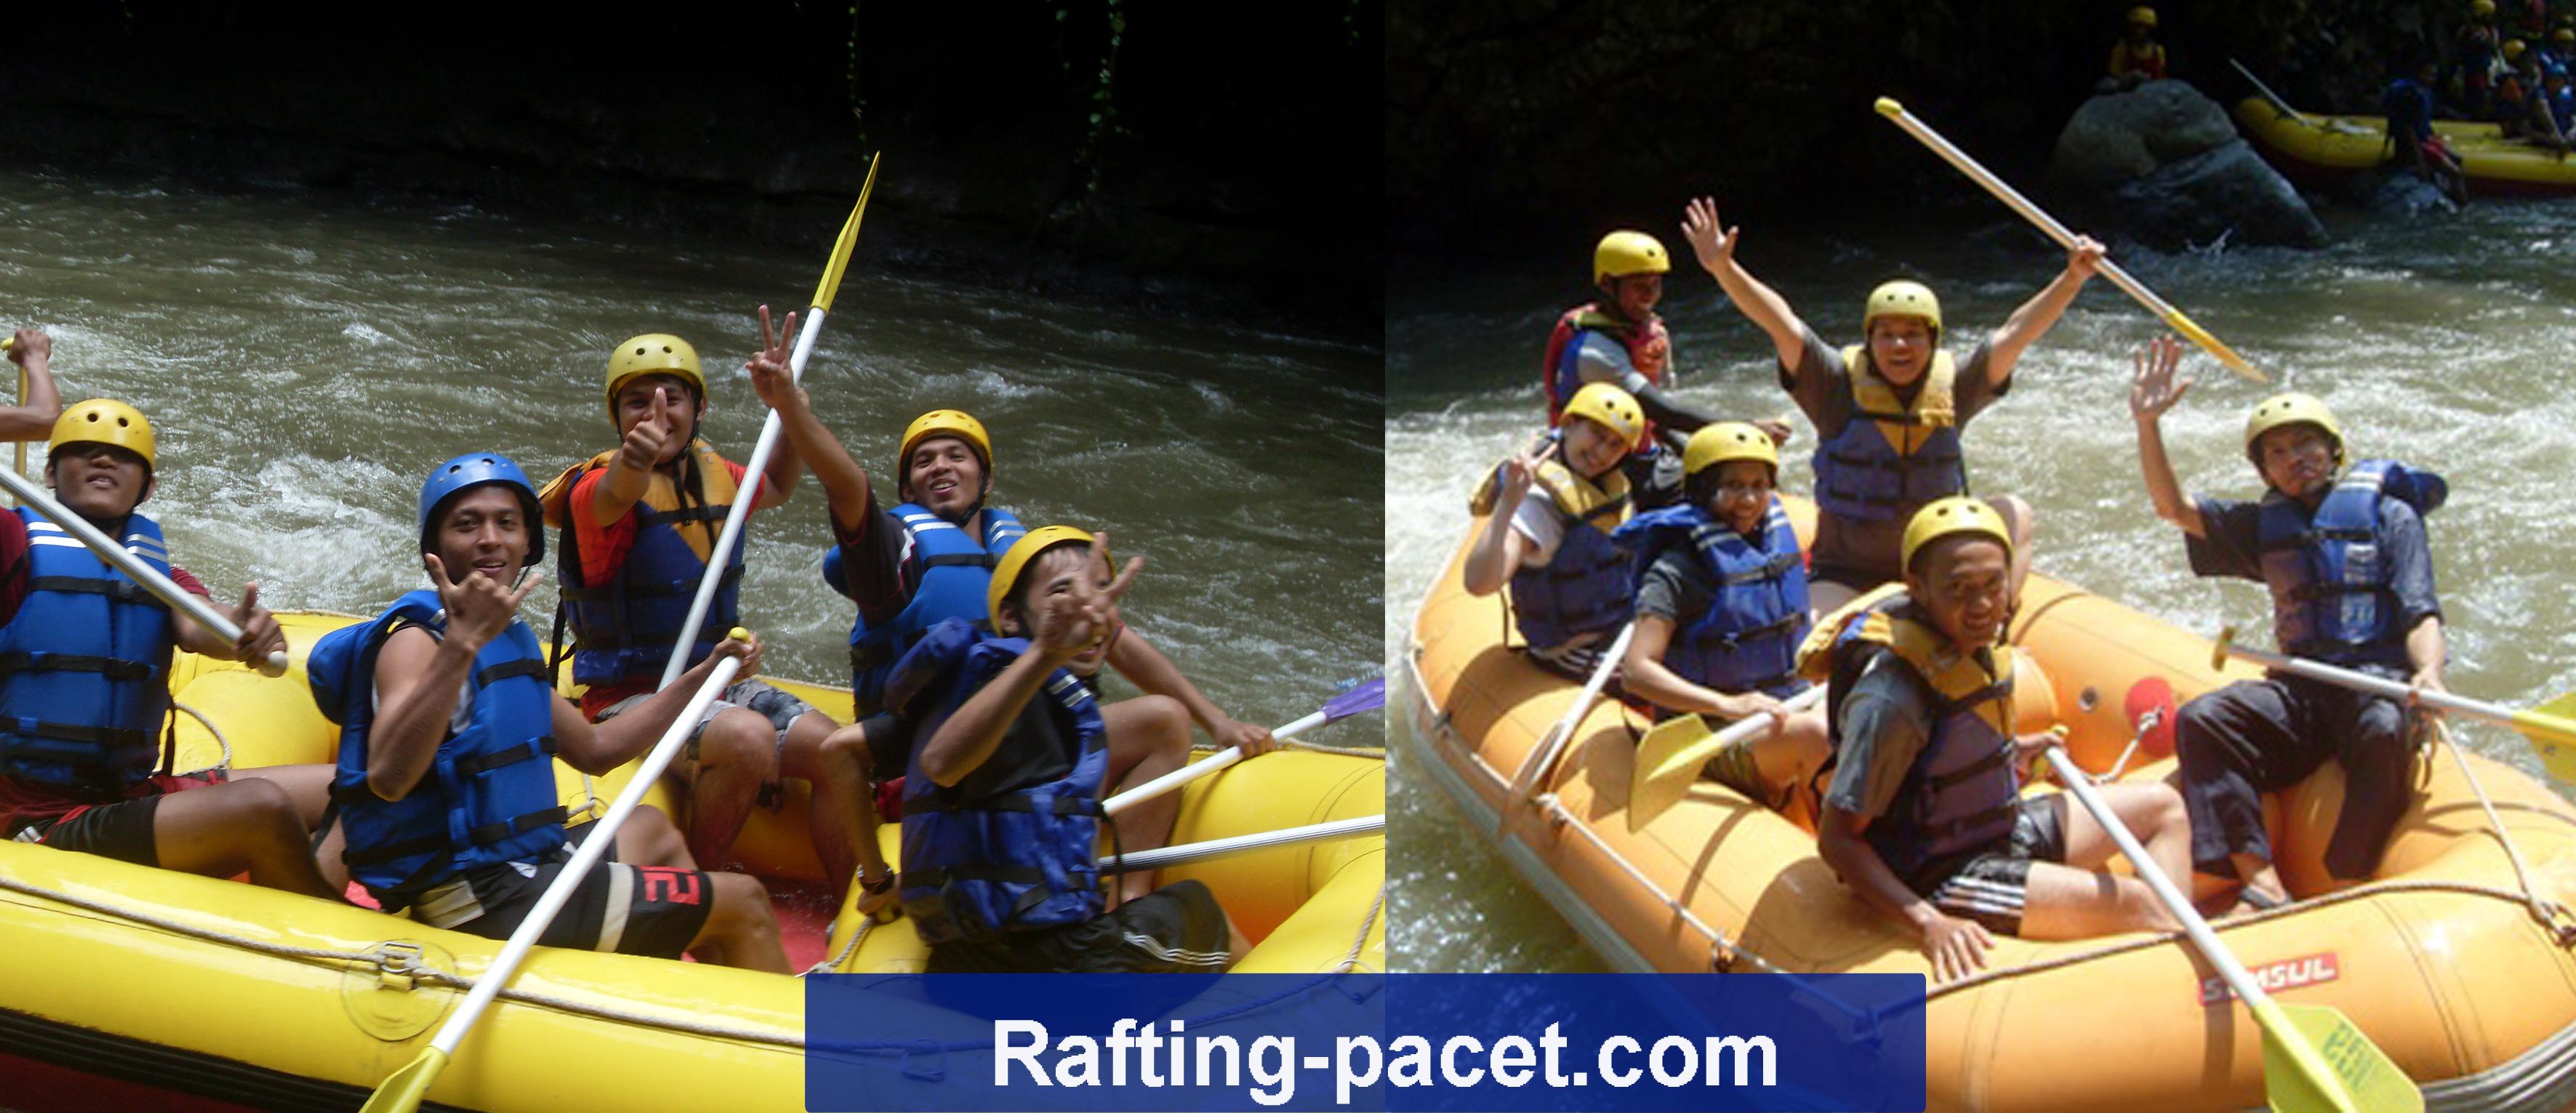 rafting,www.rafting-pacet.com,081334664876